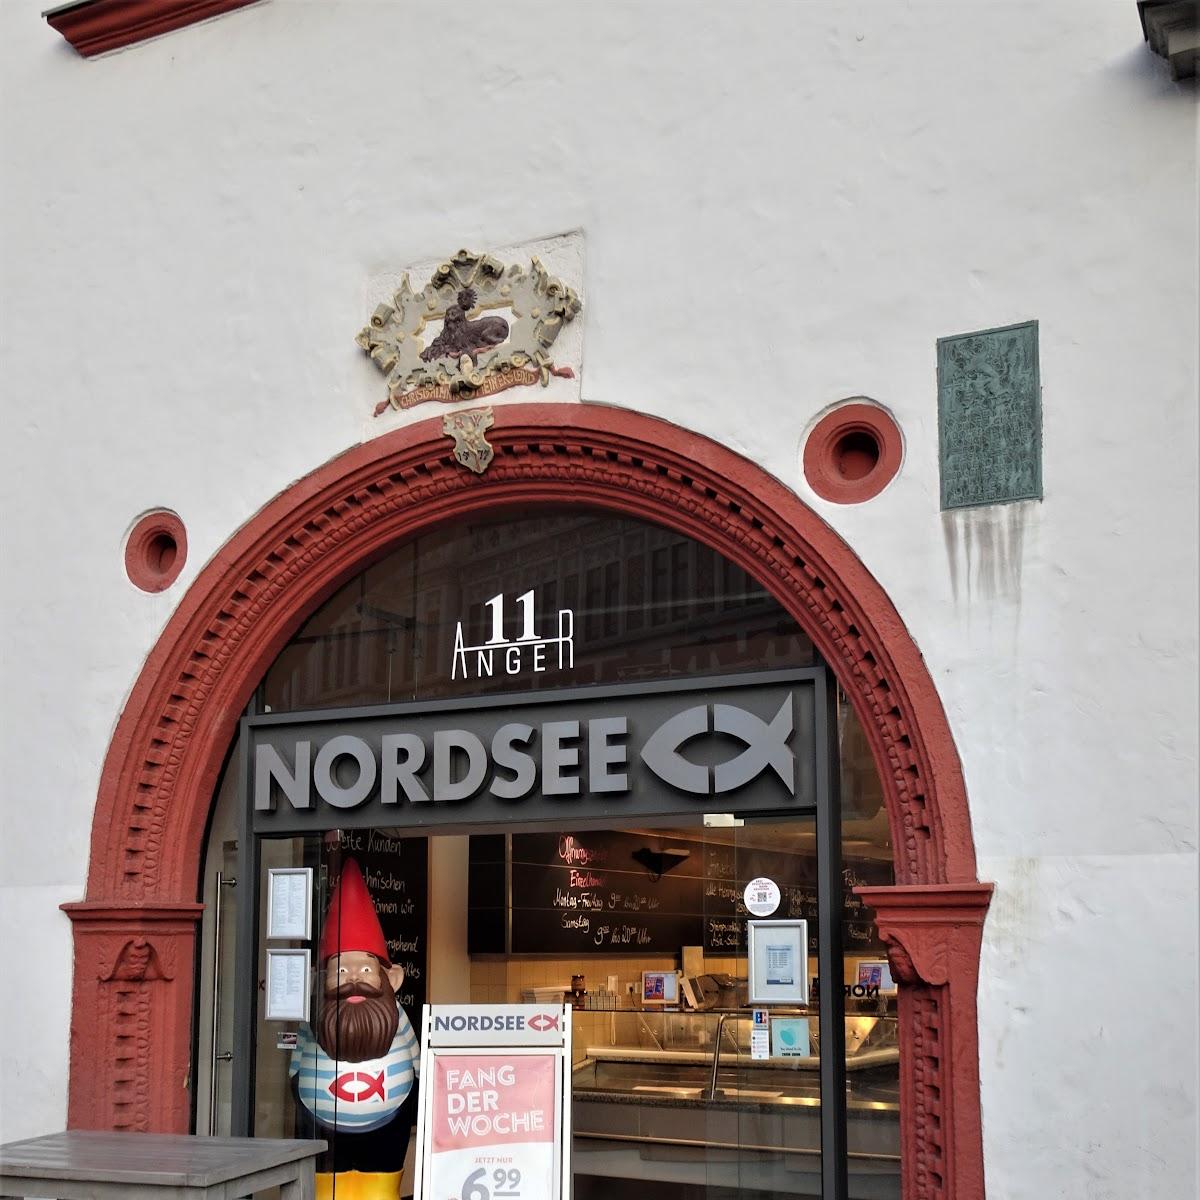 Restaurant "NORDSEE" in Erfurt